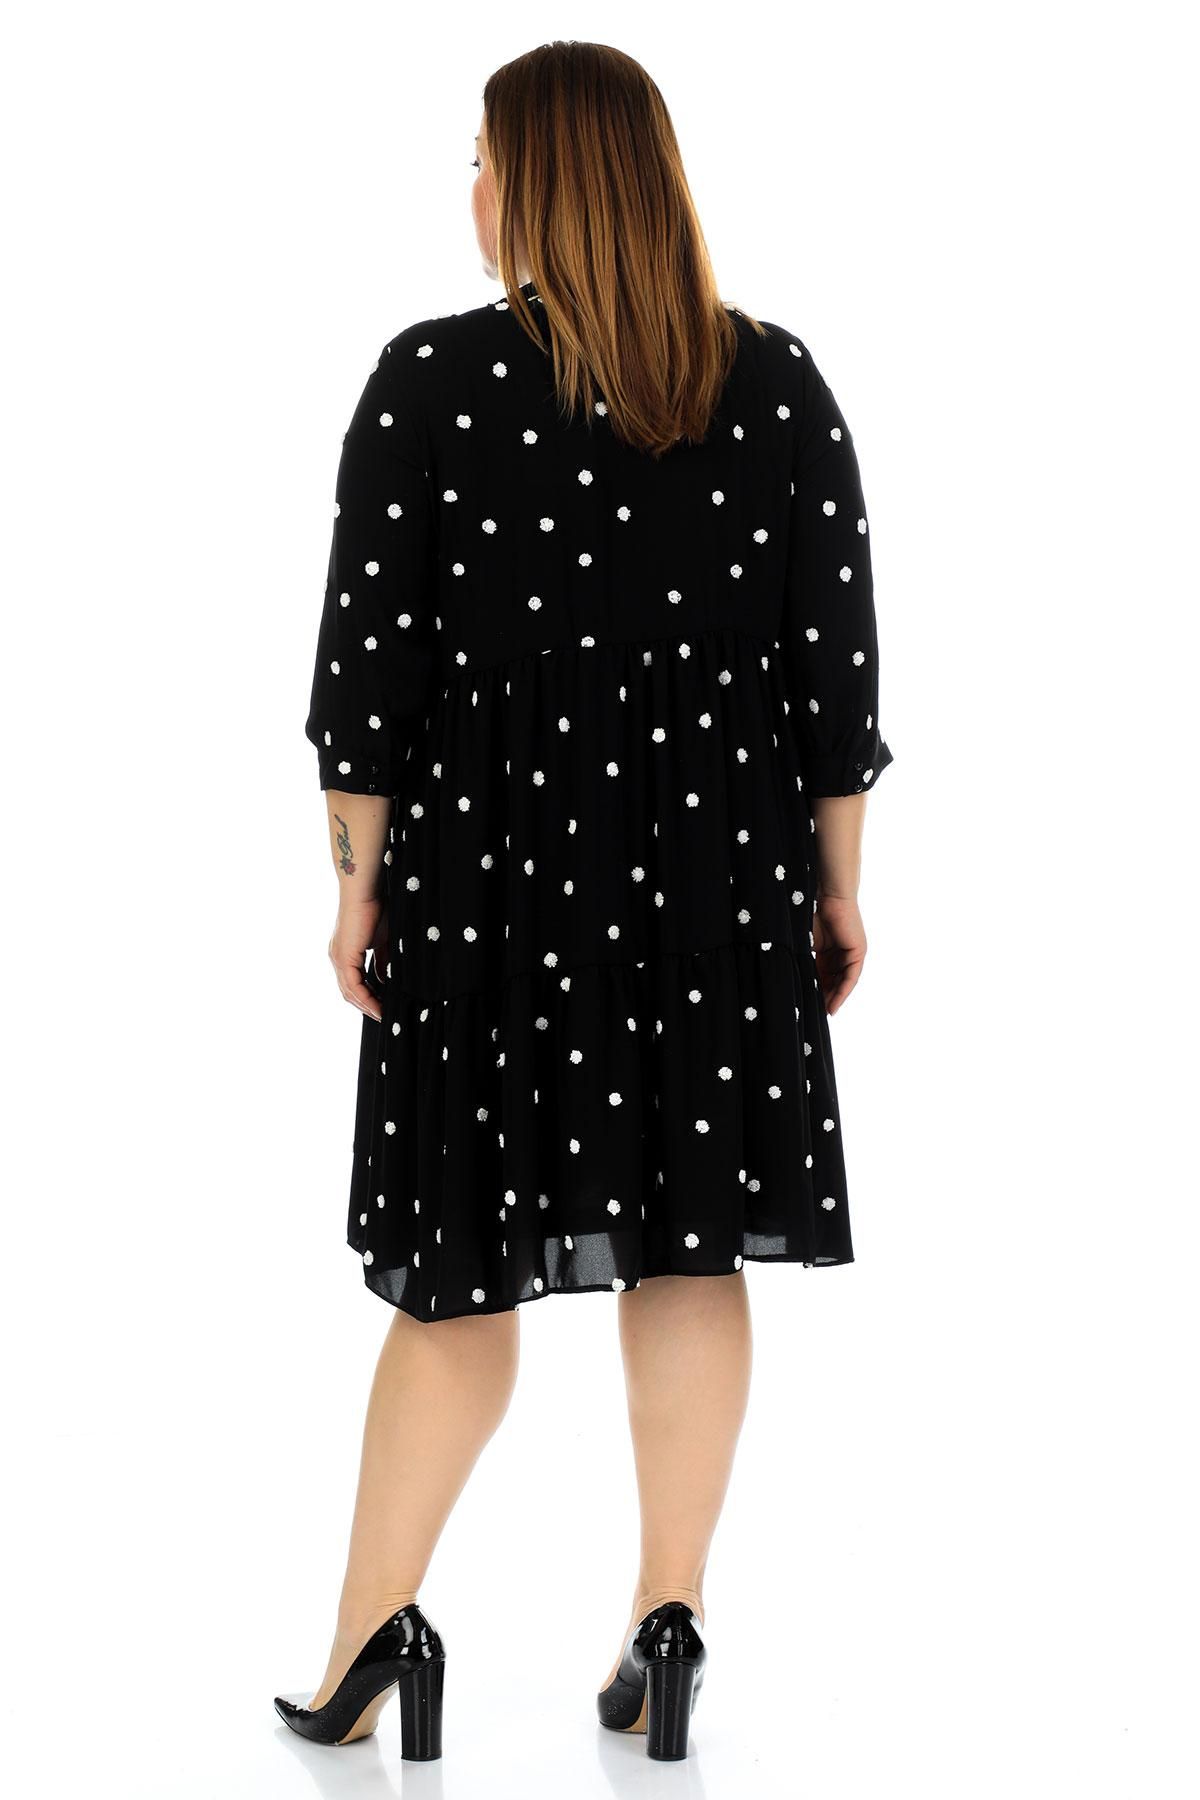 Perle Donna 1308xl BLACK Plus Size Women Dress | Dosso Dossi